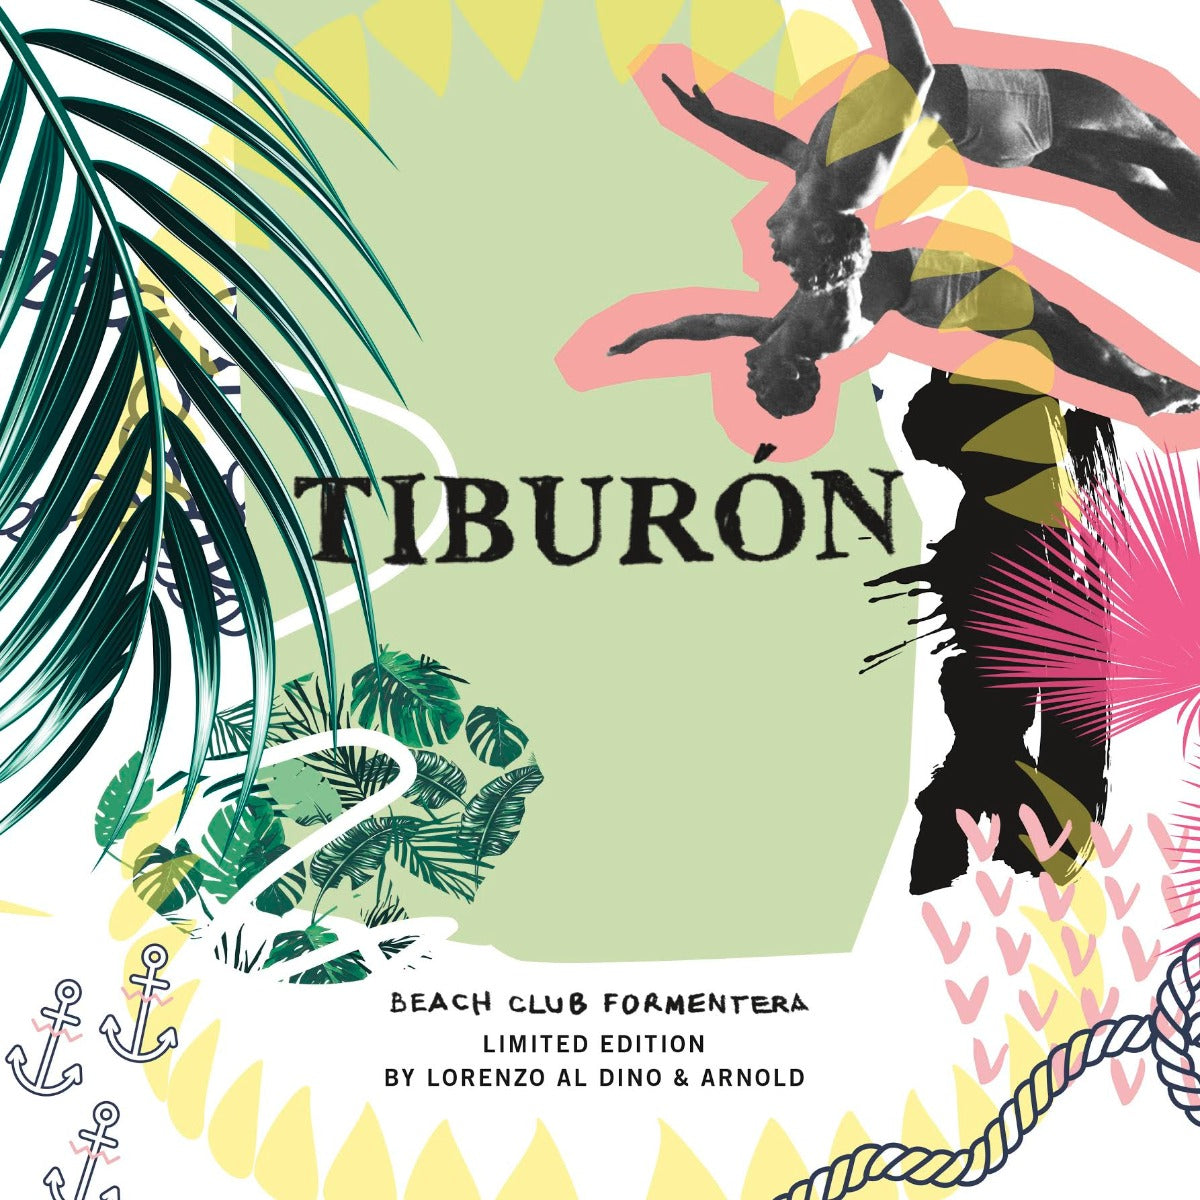 Tiburon Beach Club 3 - Formentera